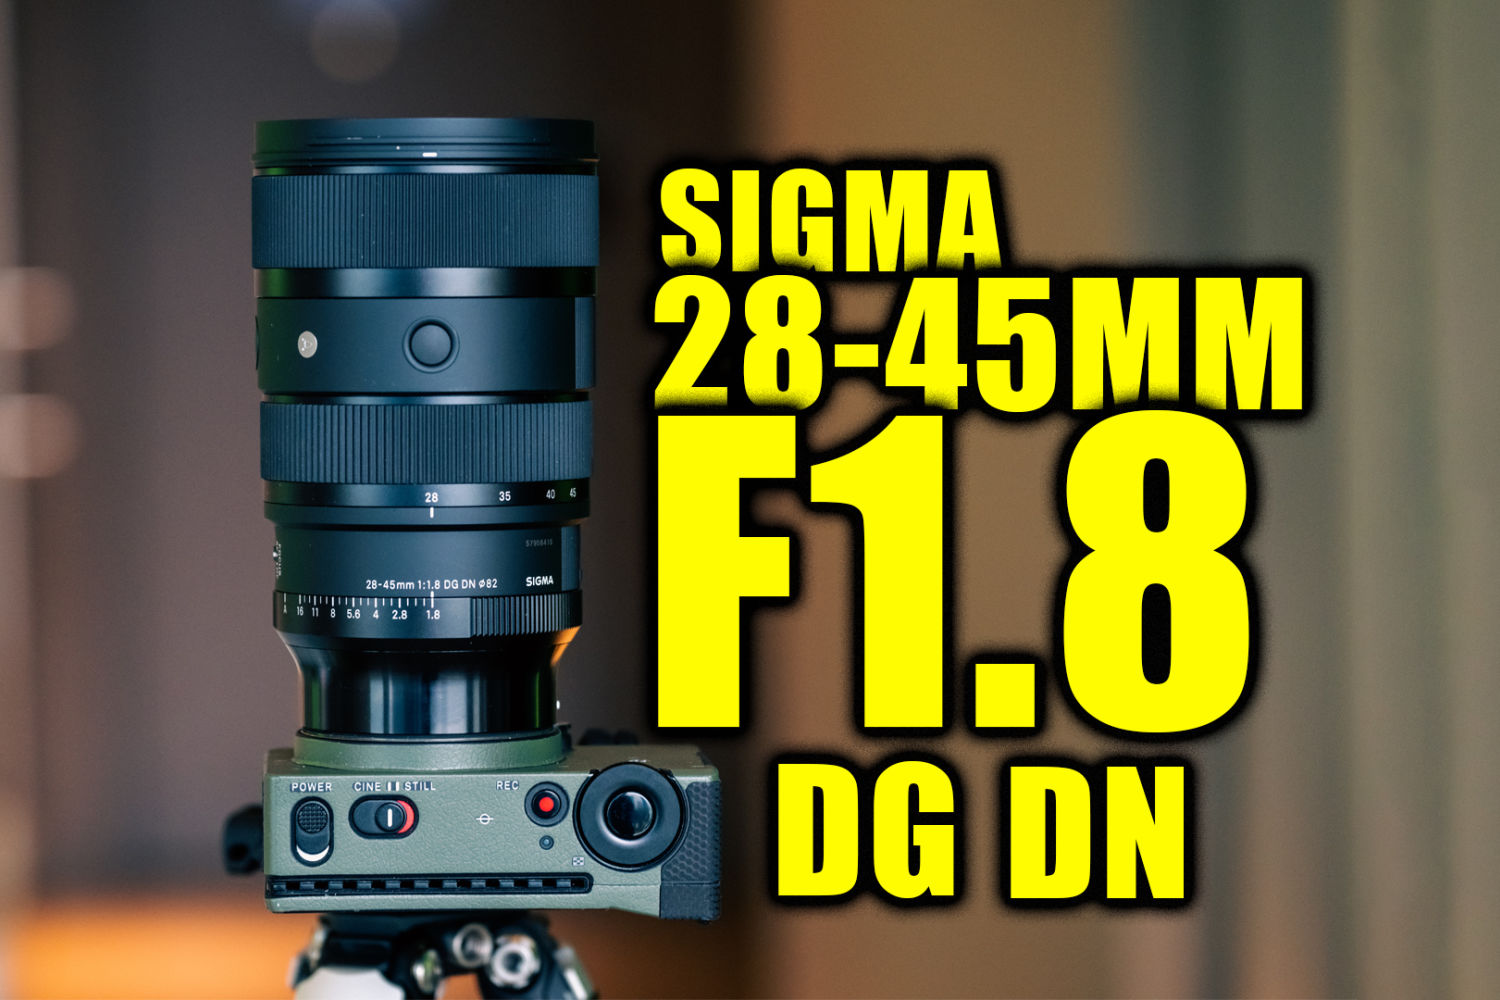 SIGMA 28-45mm F1.8 DG DN ART